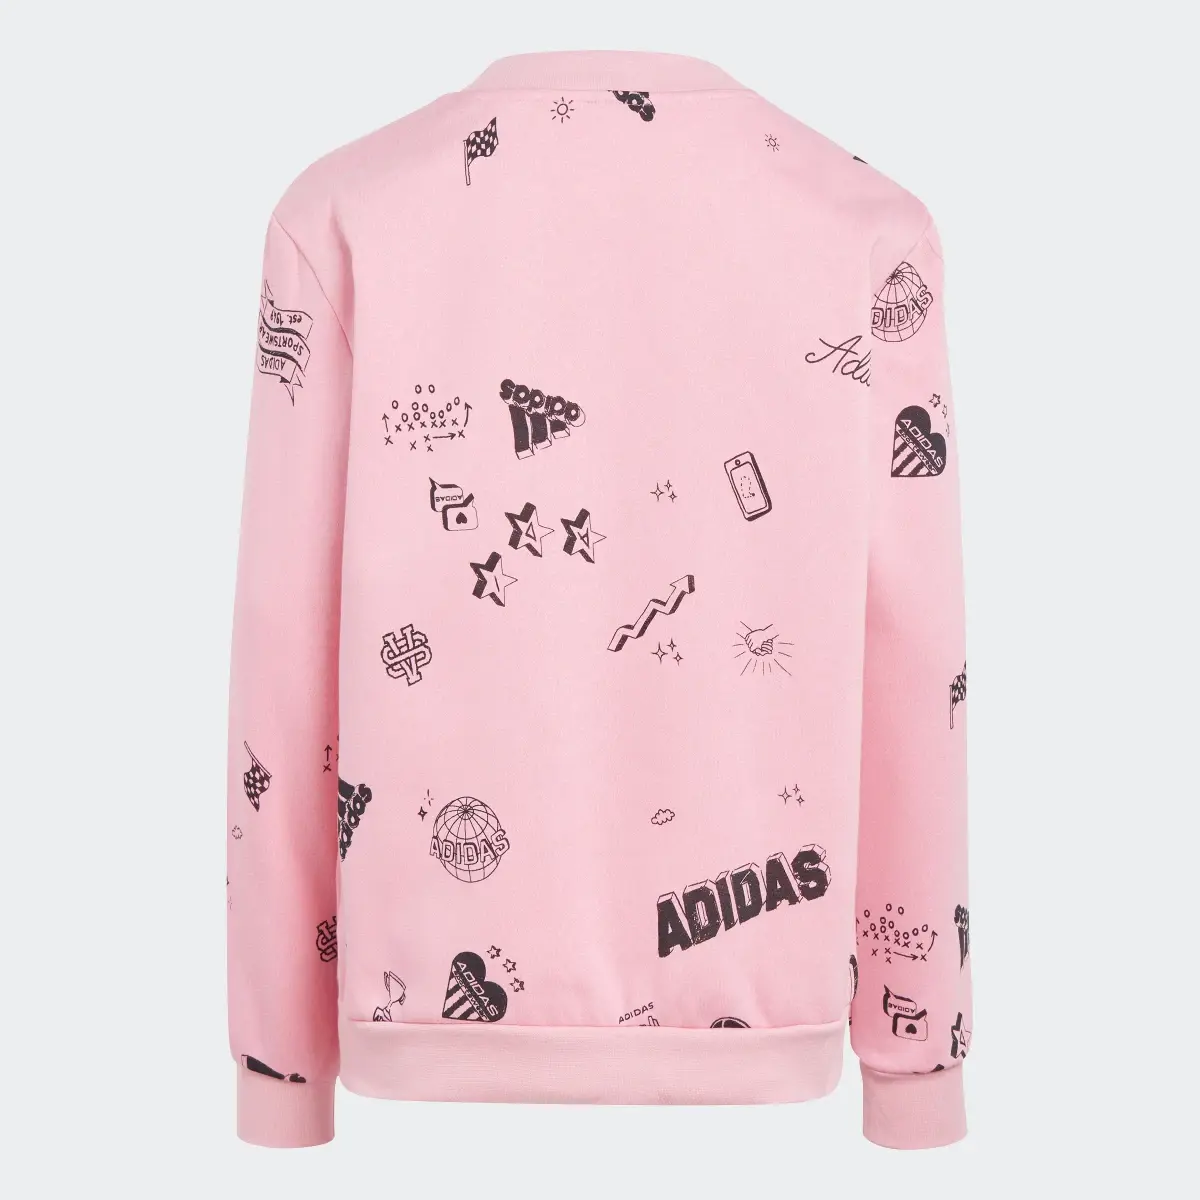 Adidas Sweatshirt Brand Love – Criança. 2